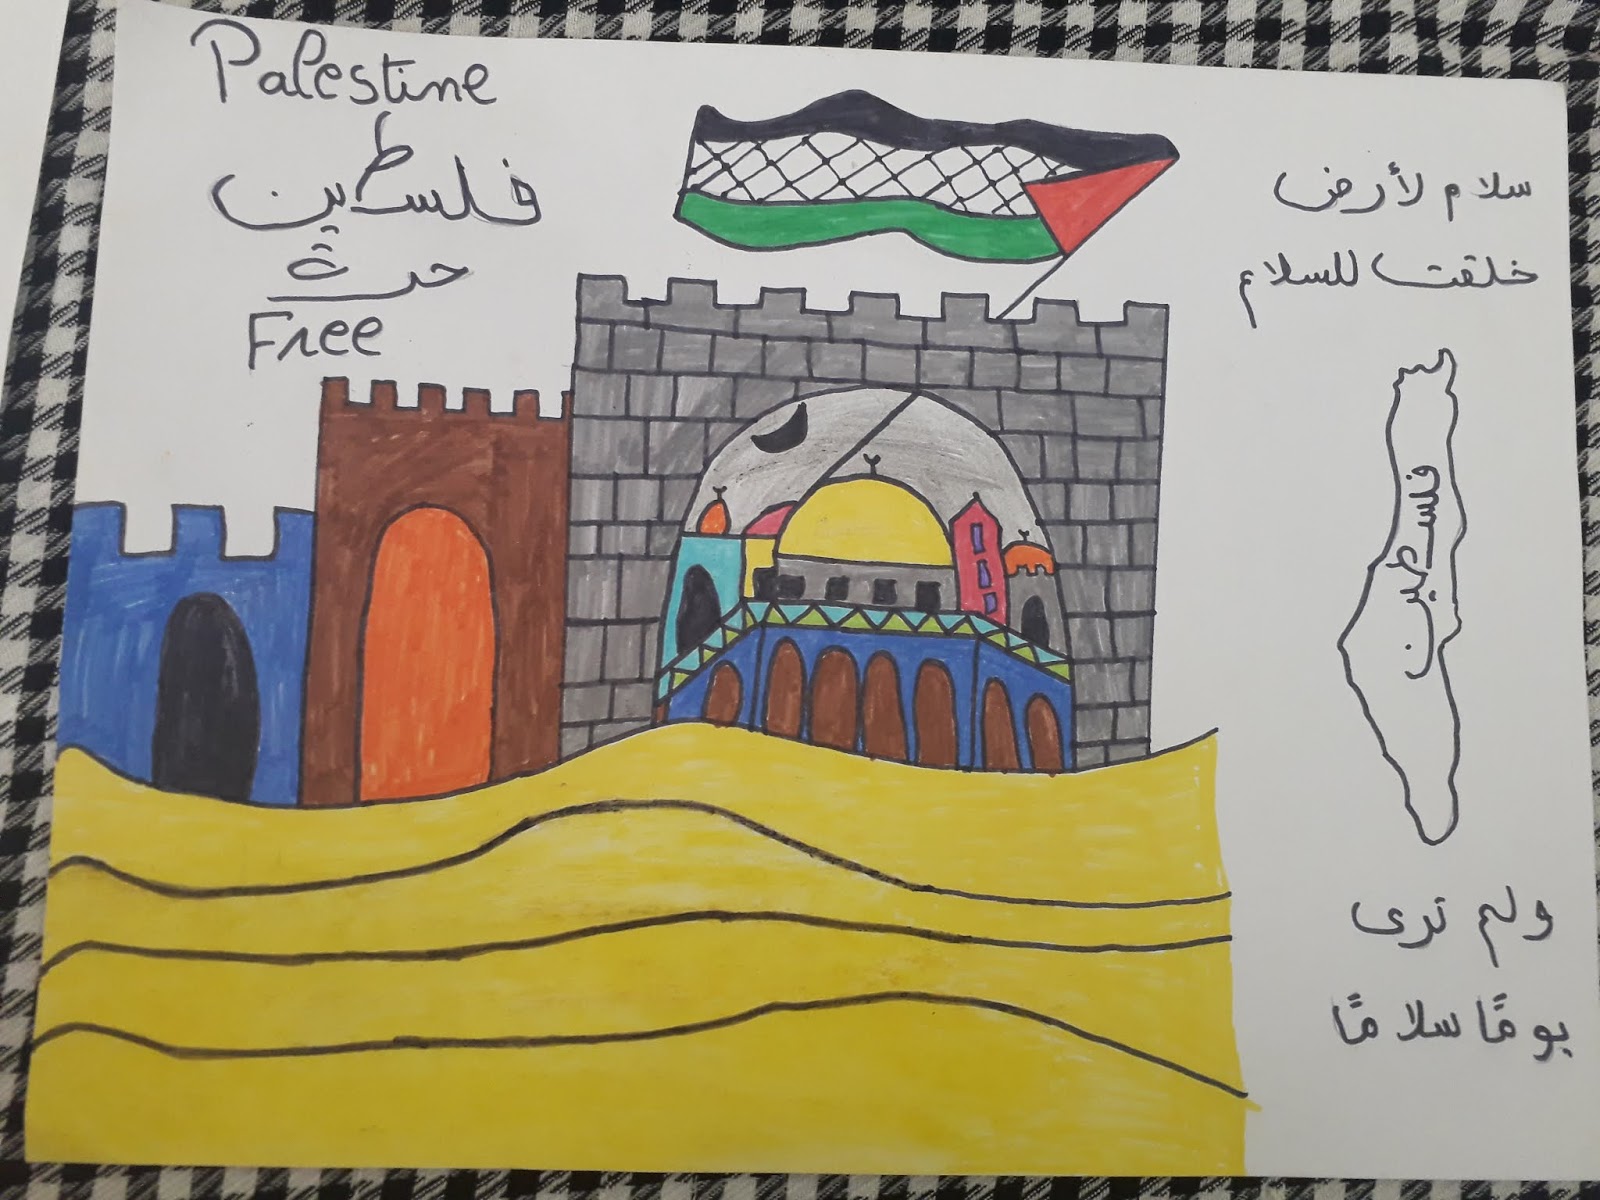 I LOVE PALESTINE: فلسطين حرة palestine free